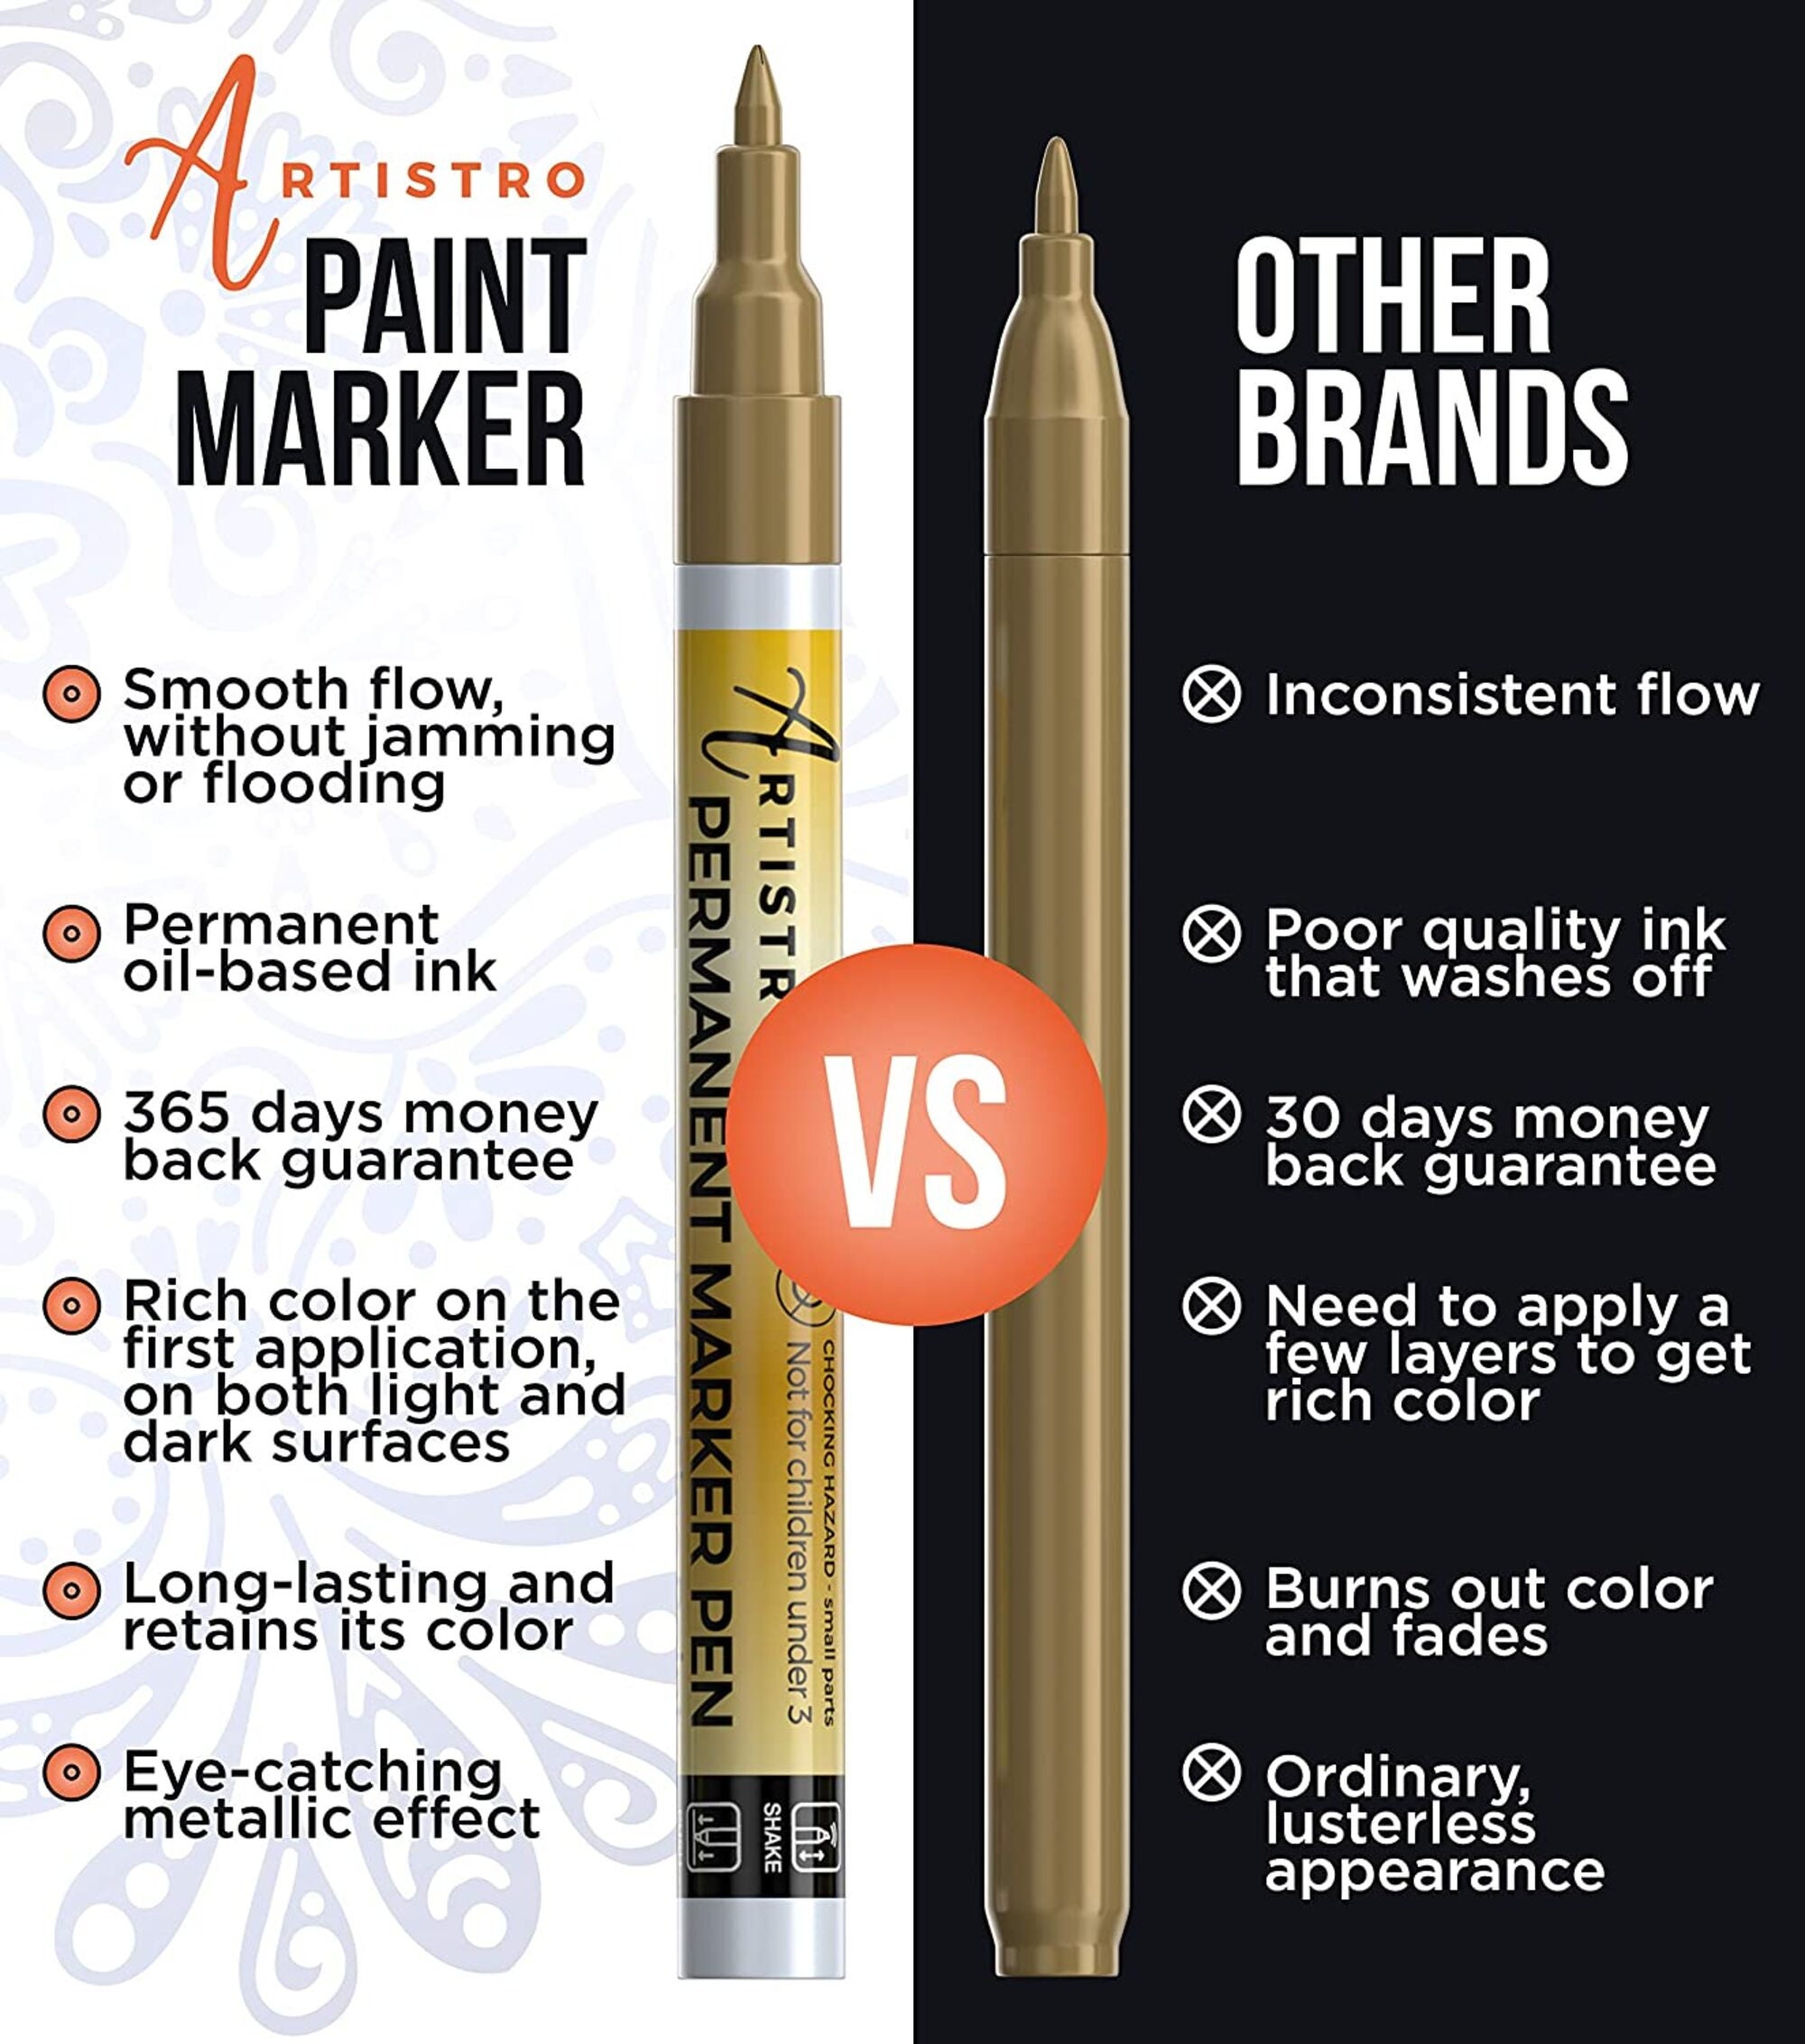 Acrylic Marker Paint Markers  Acrylic Paint Markers Pen 24 - 12